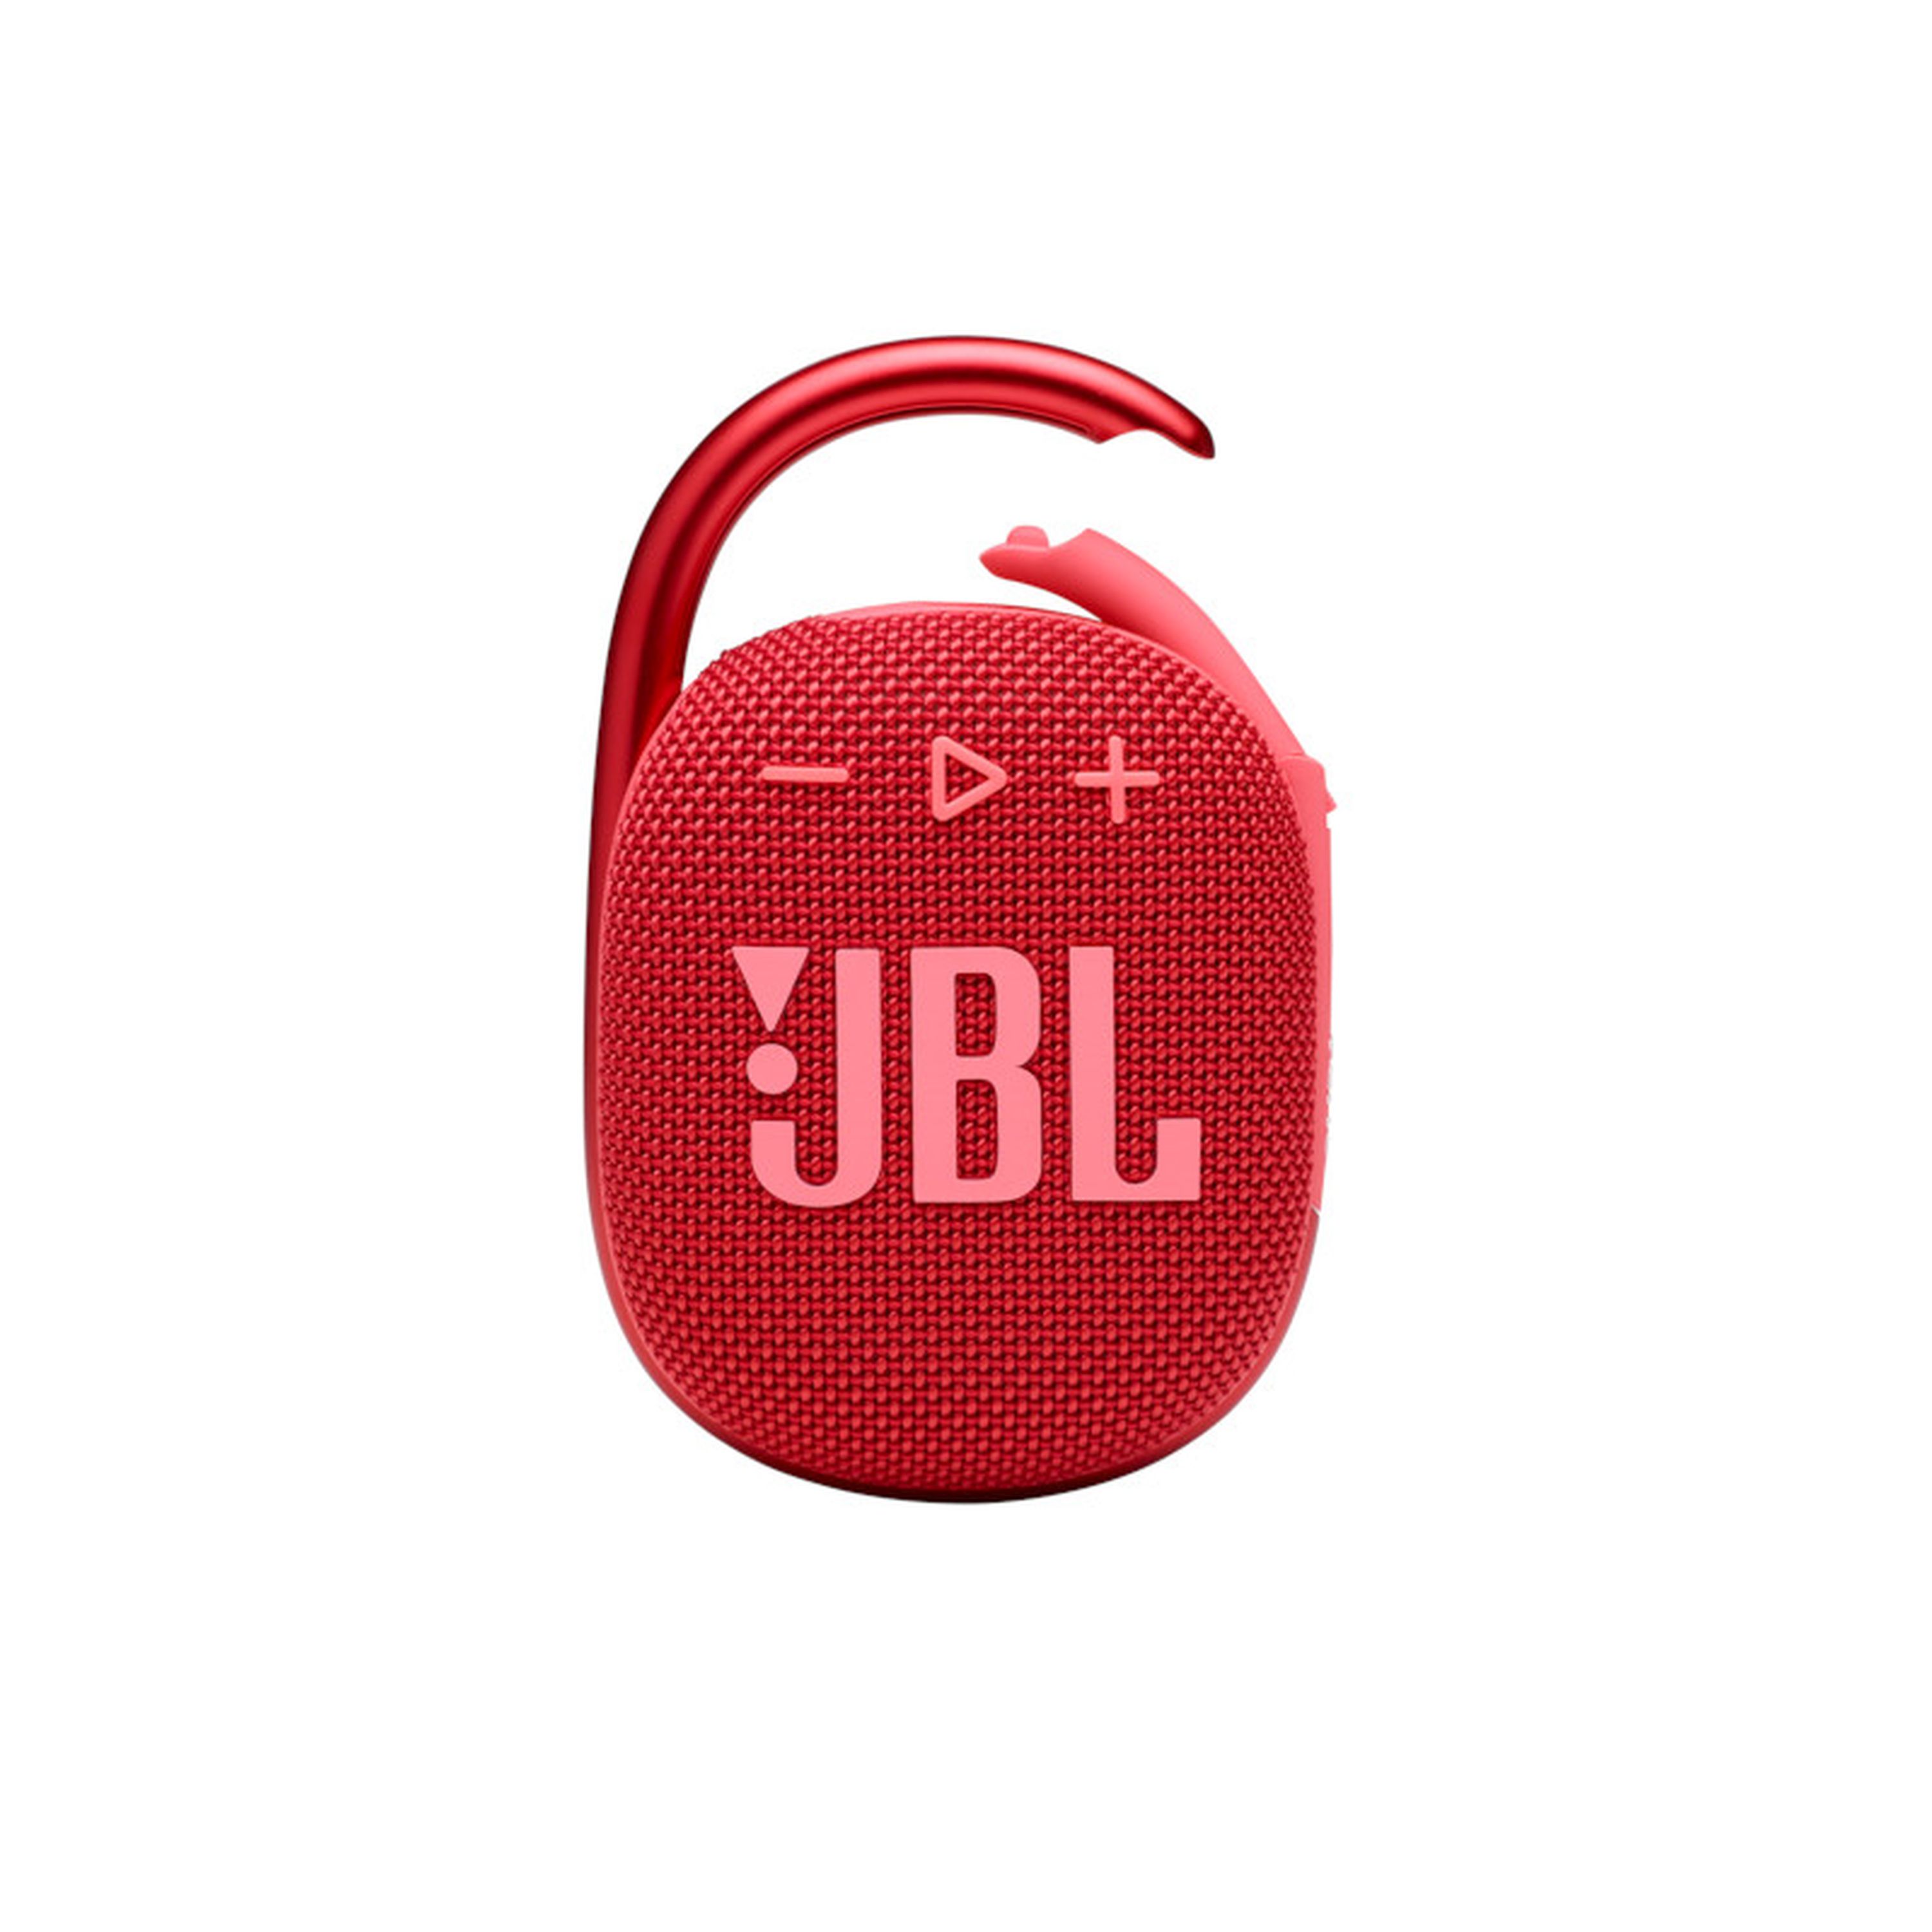 JBL Clip 4 BT Speaker- Red 0.3885-Watt Bluetooth Indoor/Outdoor Portable Speaker in the Speakers department at Lowes.com